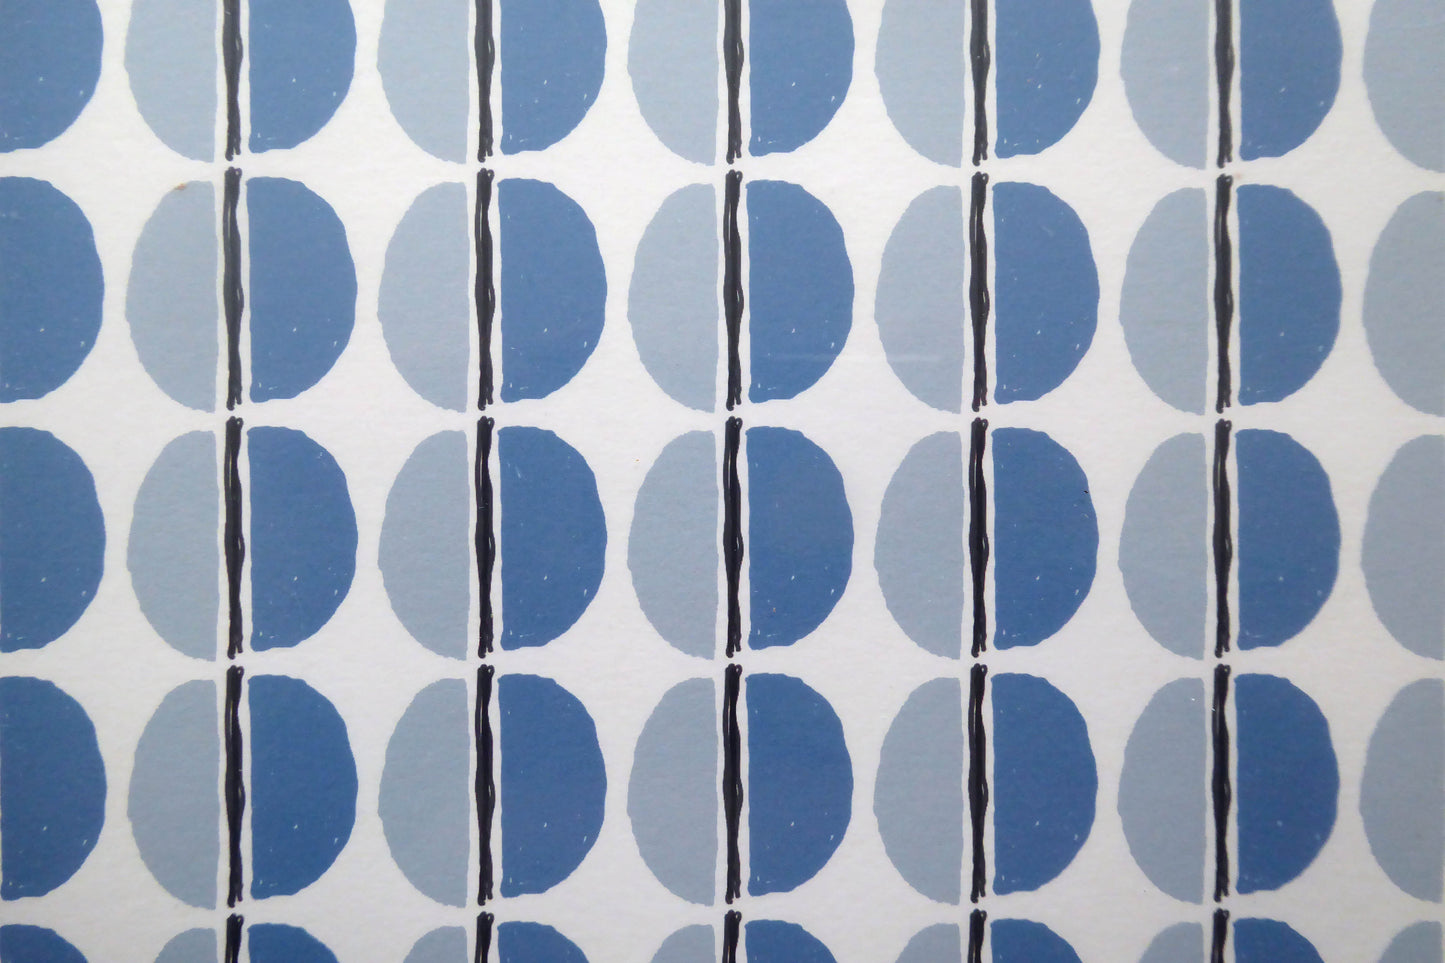 Digital Drawing #3 - Blue - repeat pattern - by Norfolk based artist Debbie Osborn